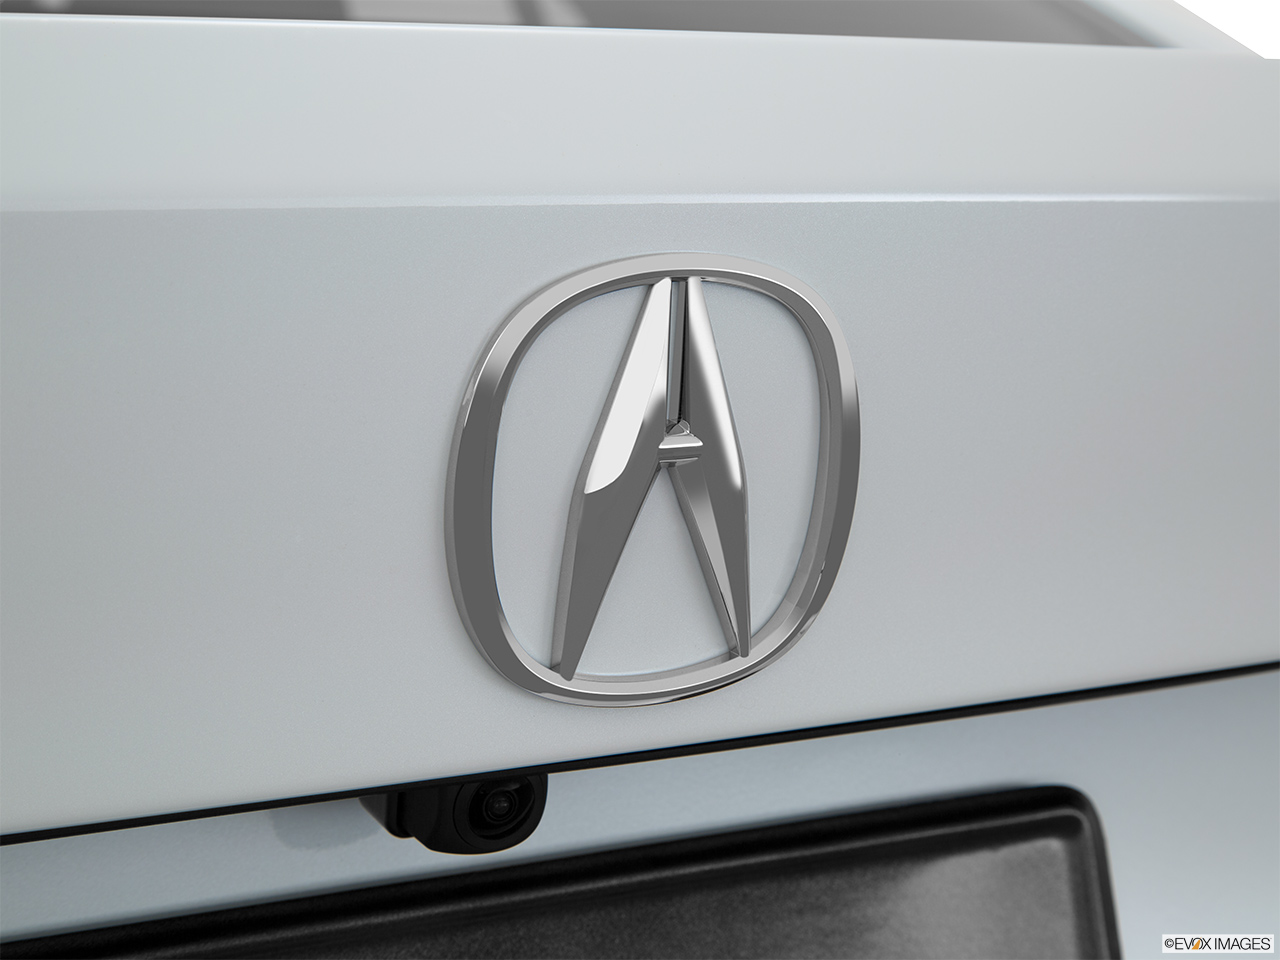 2015 Acura TLX 3.5 V-6 9-AT SH-AWD Rear manufacture badge/emblem 